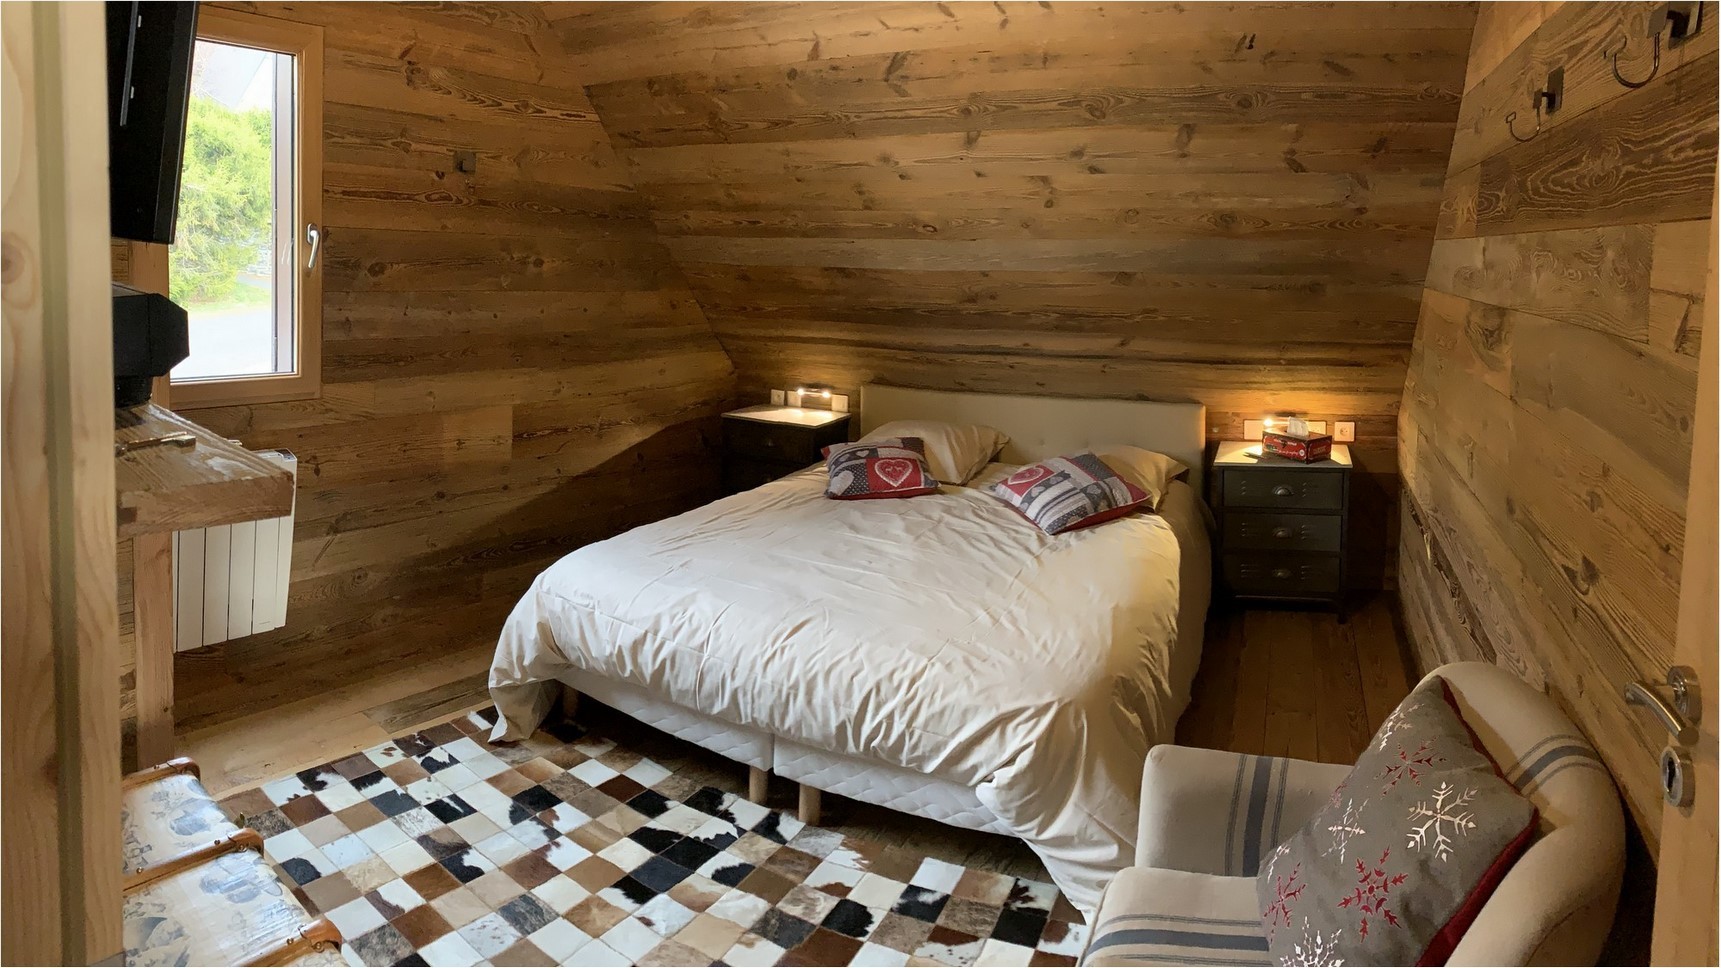 Super Besse chalet, Anorak chalet, Tyrolean bedroom, view from the bedroom